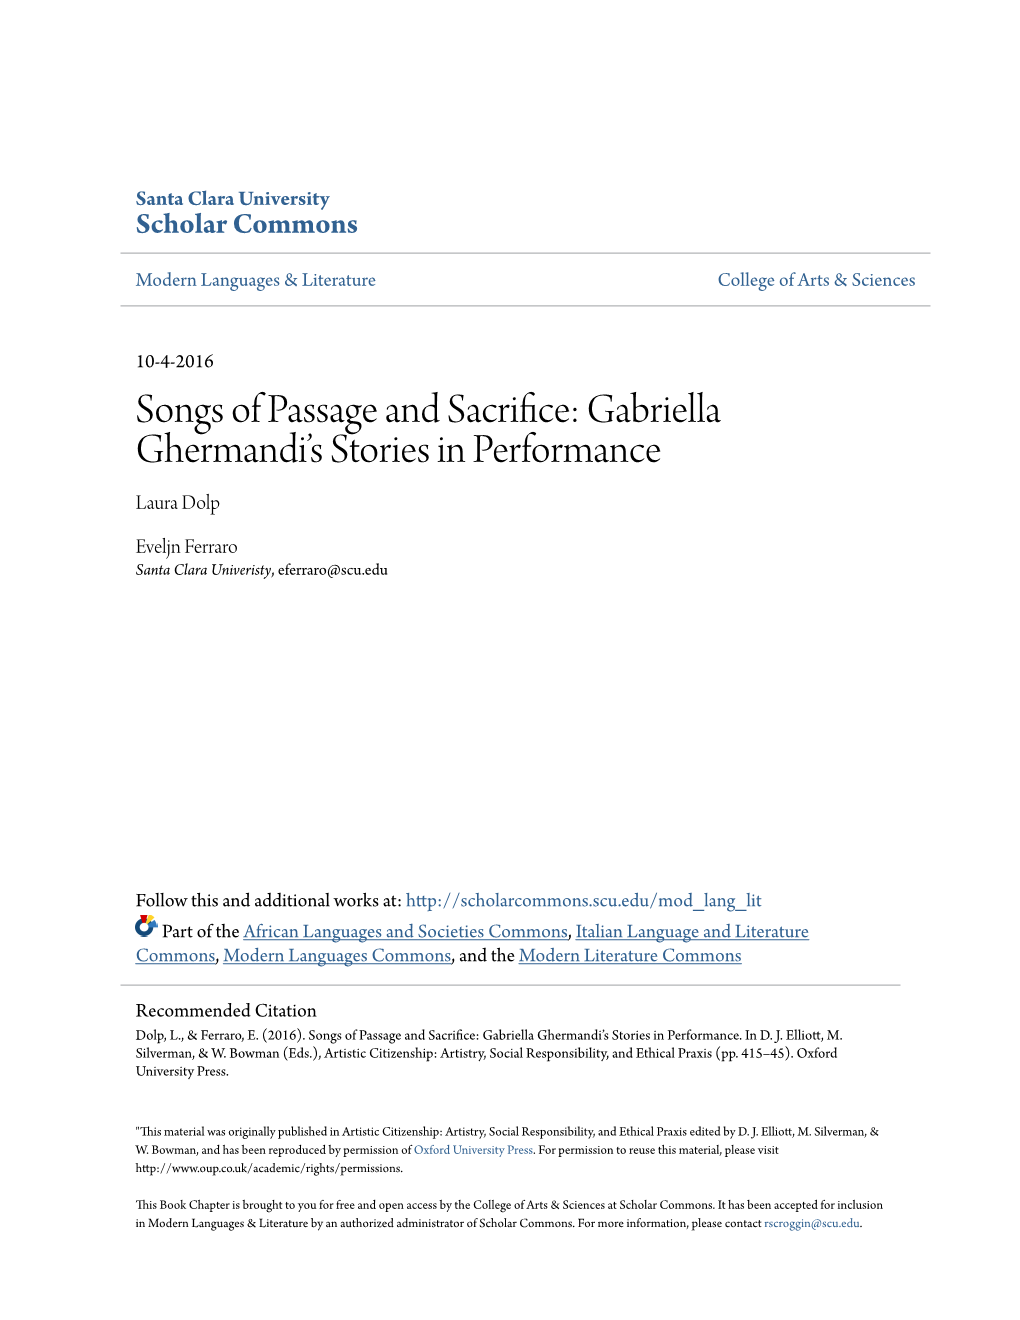 Songs of Passage and Sacrifice: Gabriella Ghermandiâ•Žs Stories in Performance